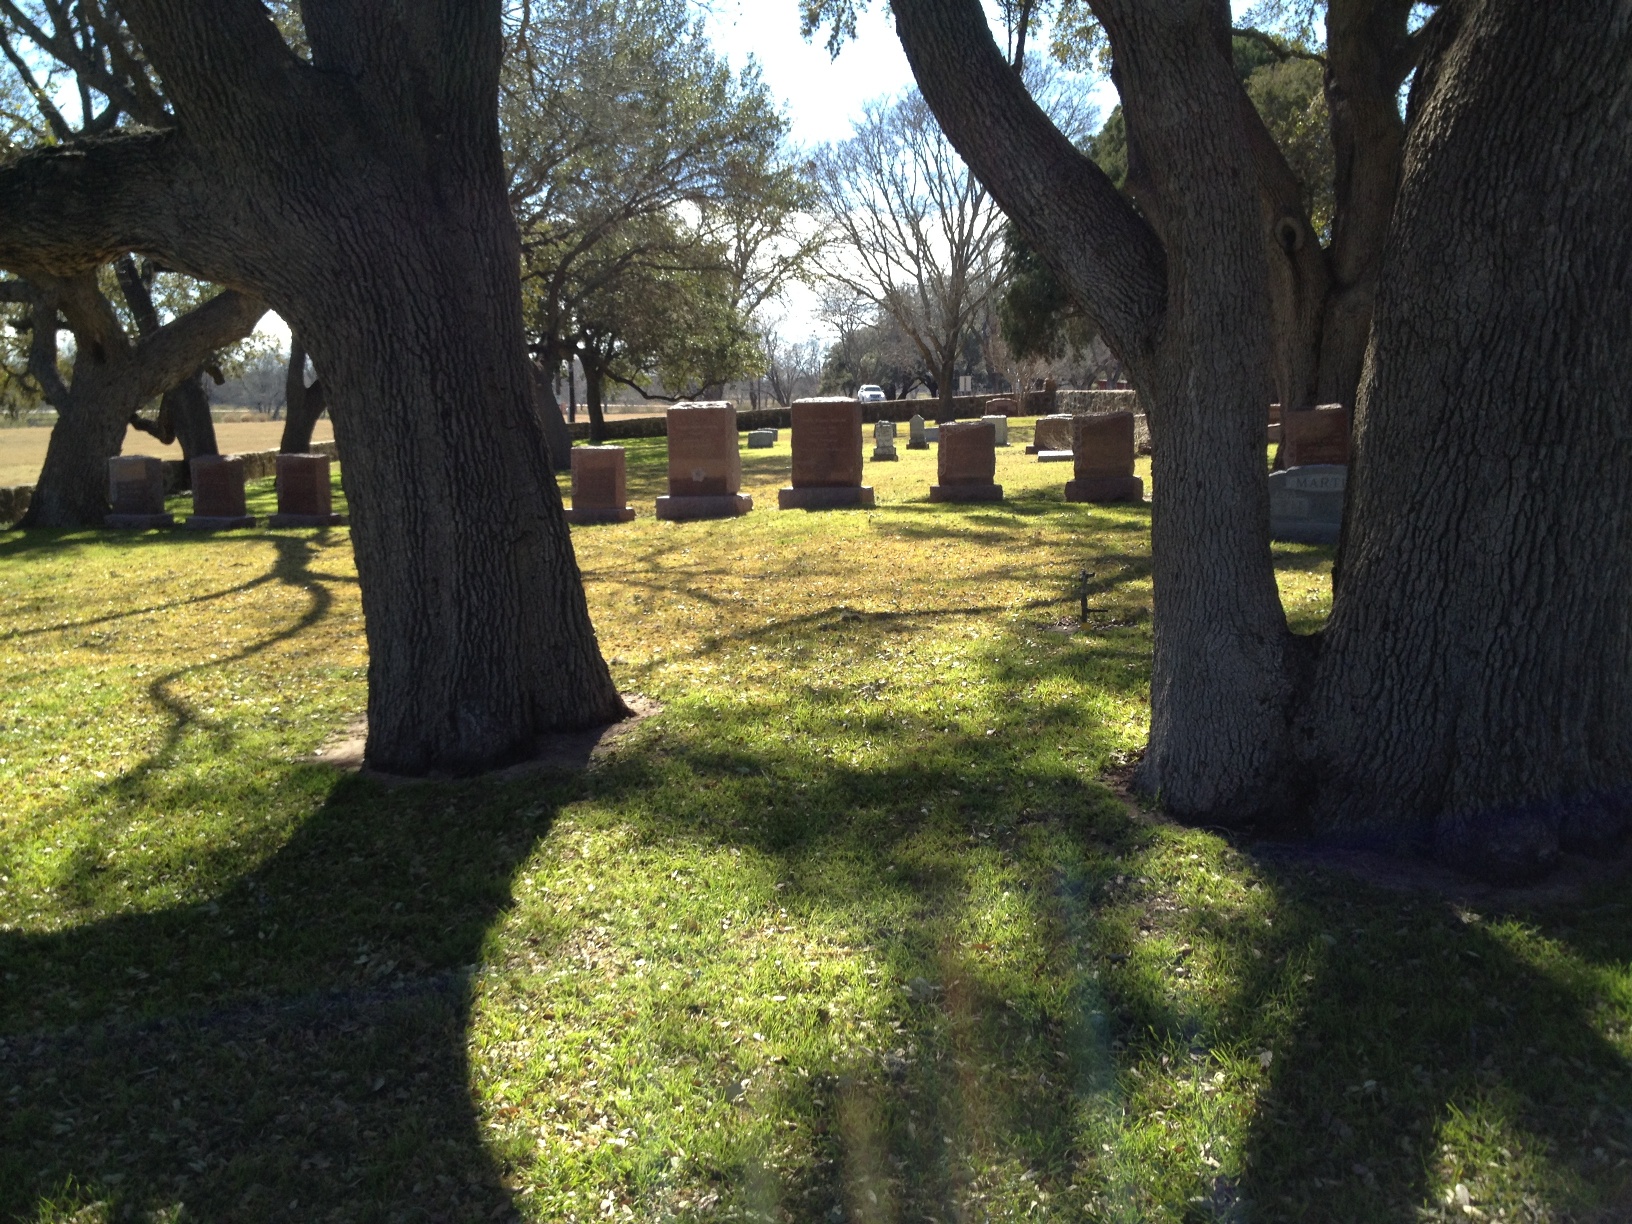 Lyndon Johnson gravesite